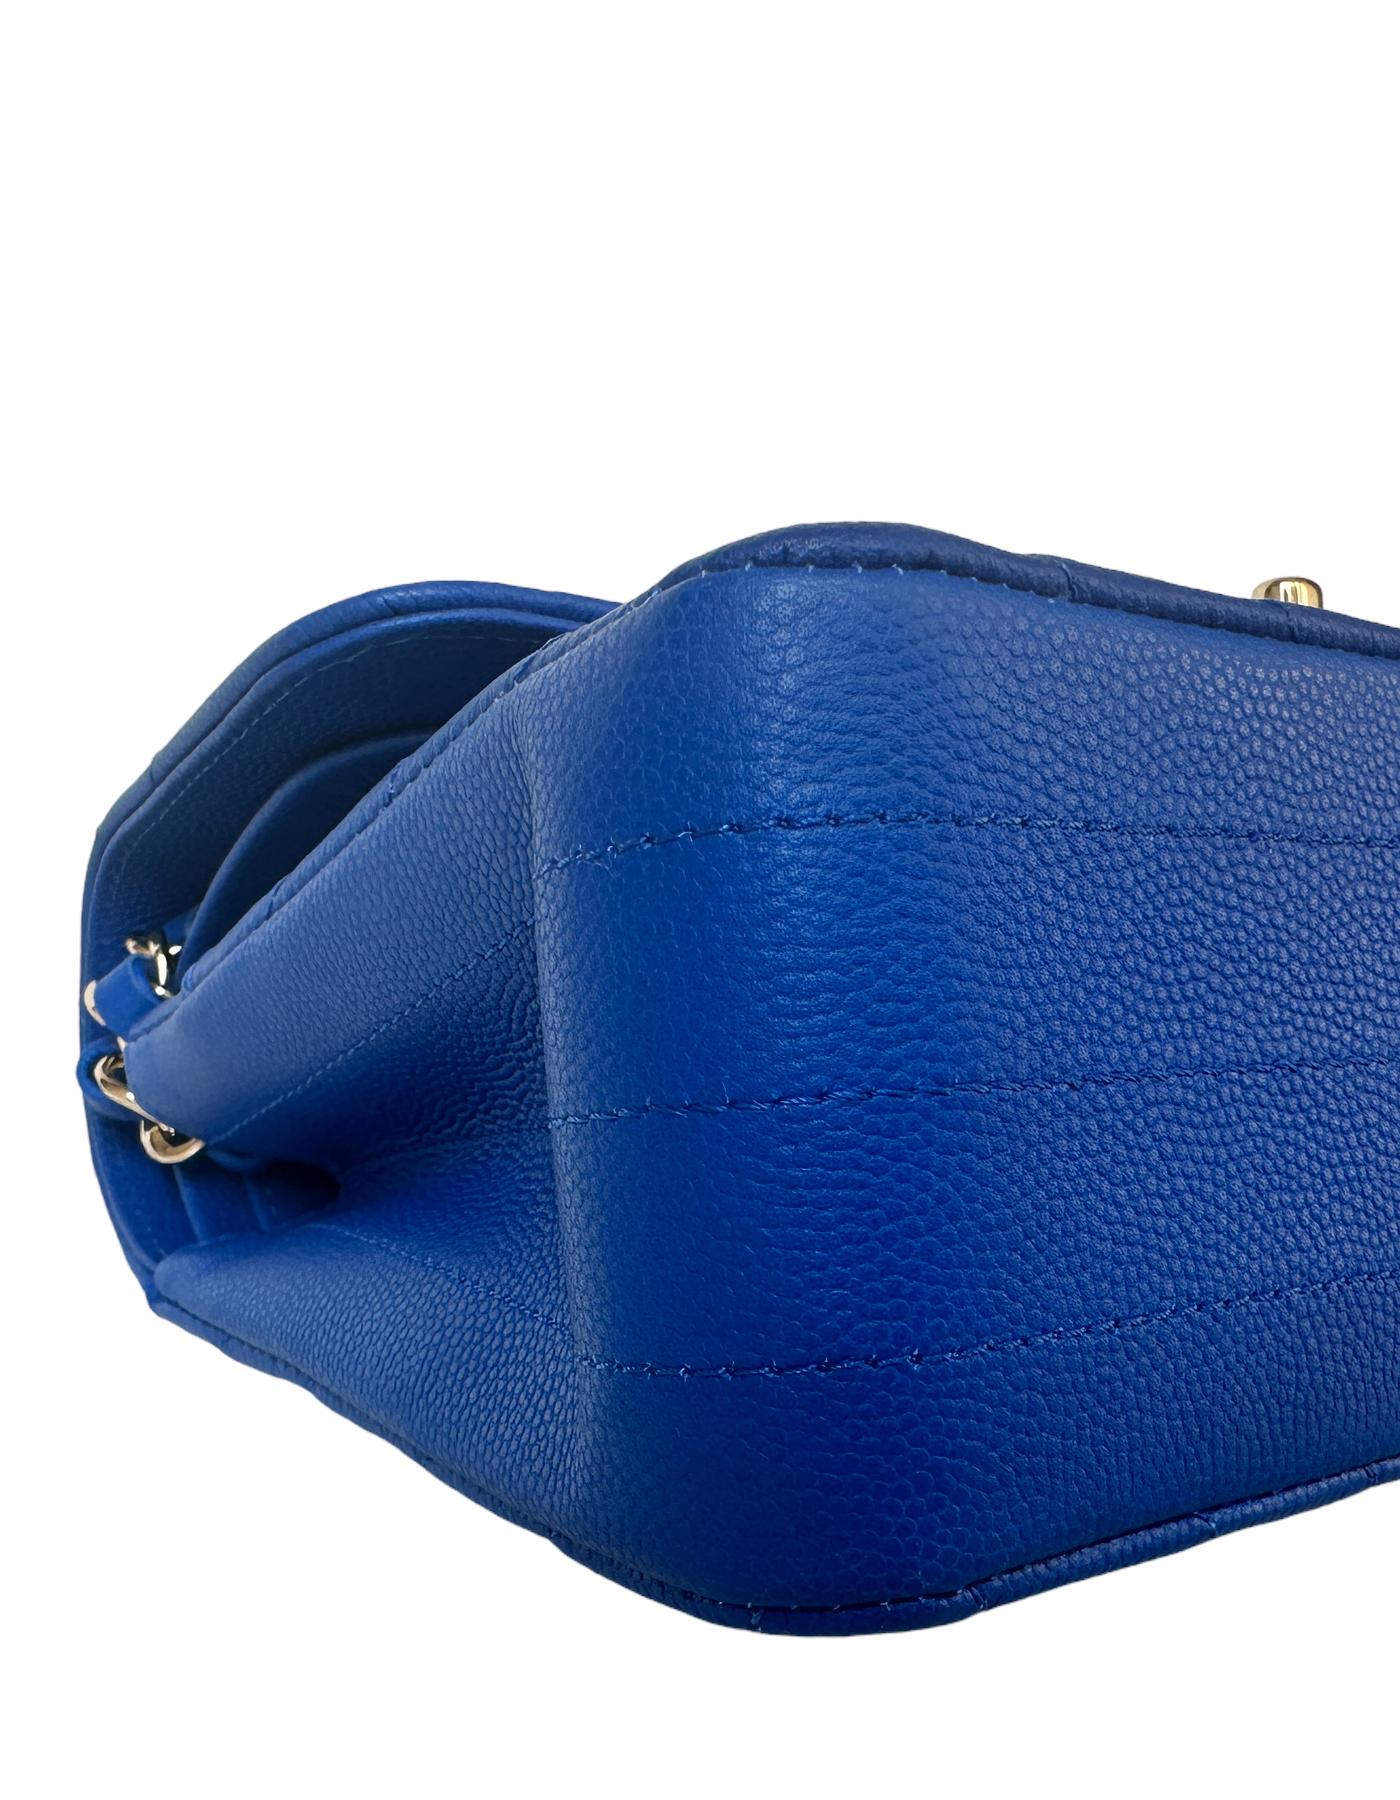 Chanel Cobalt Blue Caviar Leather Chevron Small Double Flap Classic Bag For Sale 2